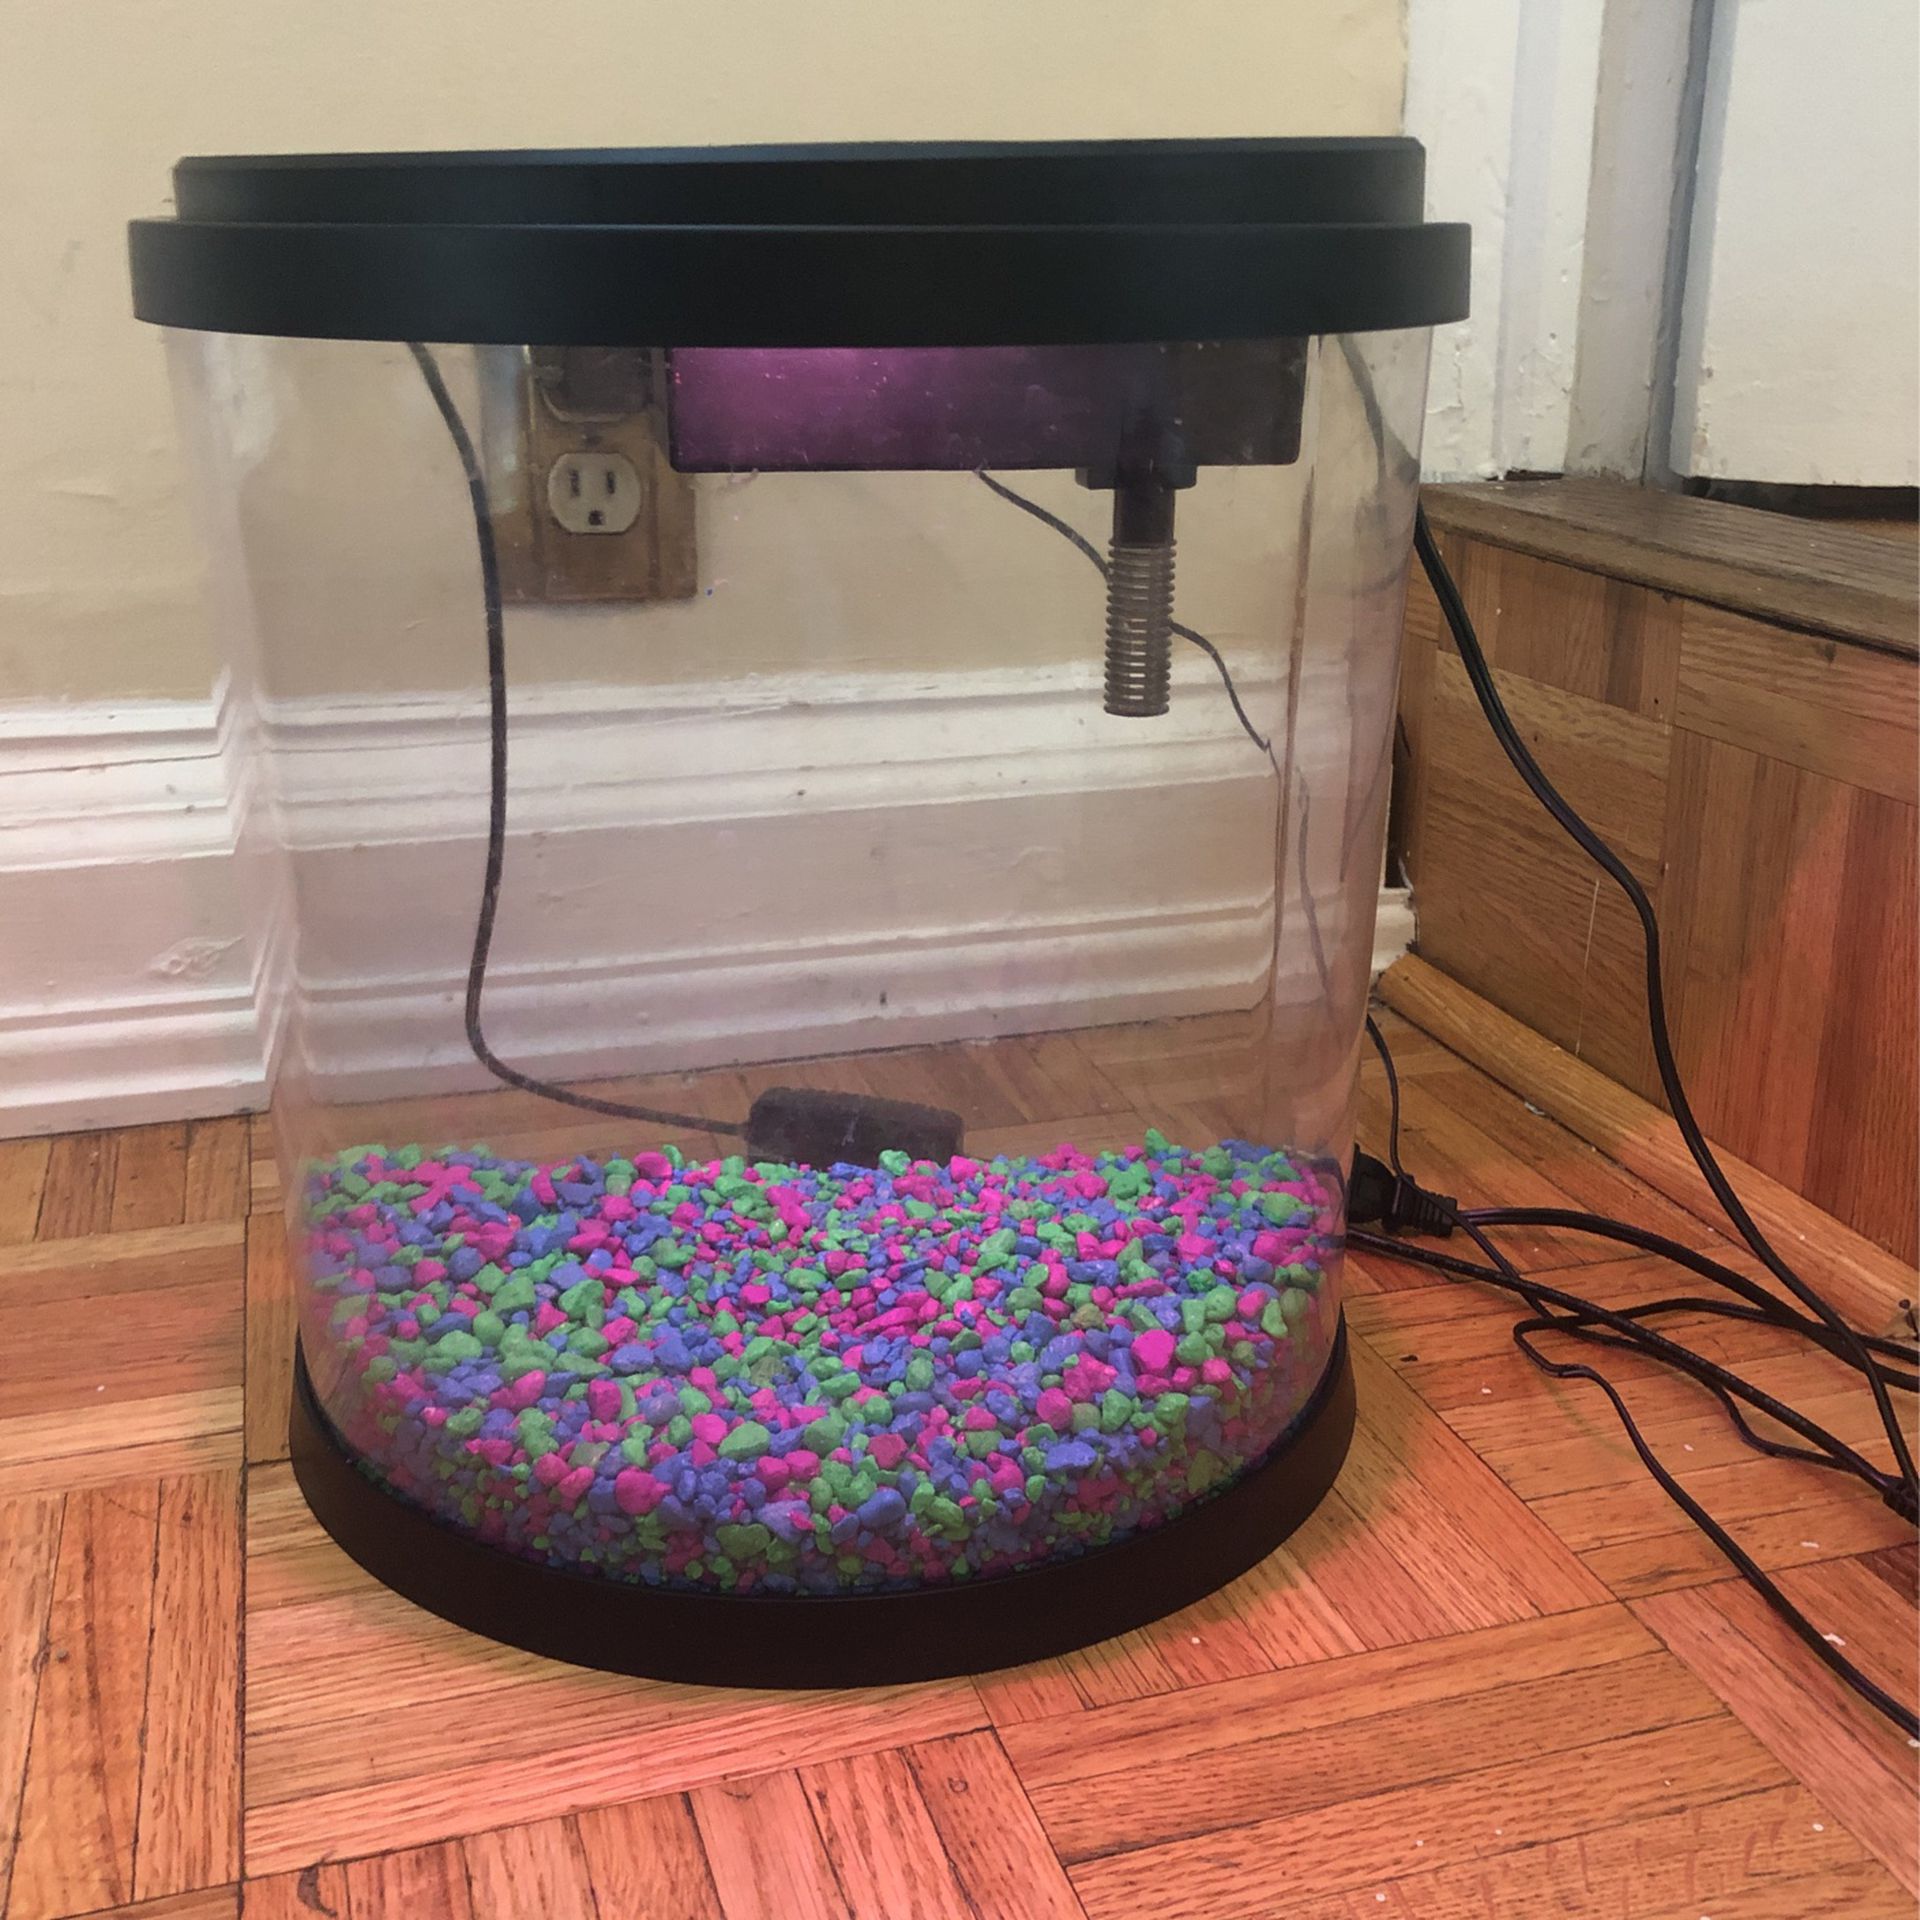 TopFin Fish Tank